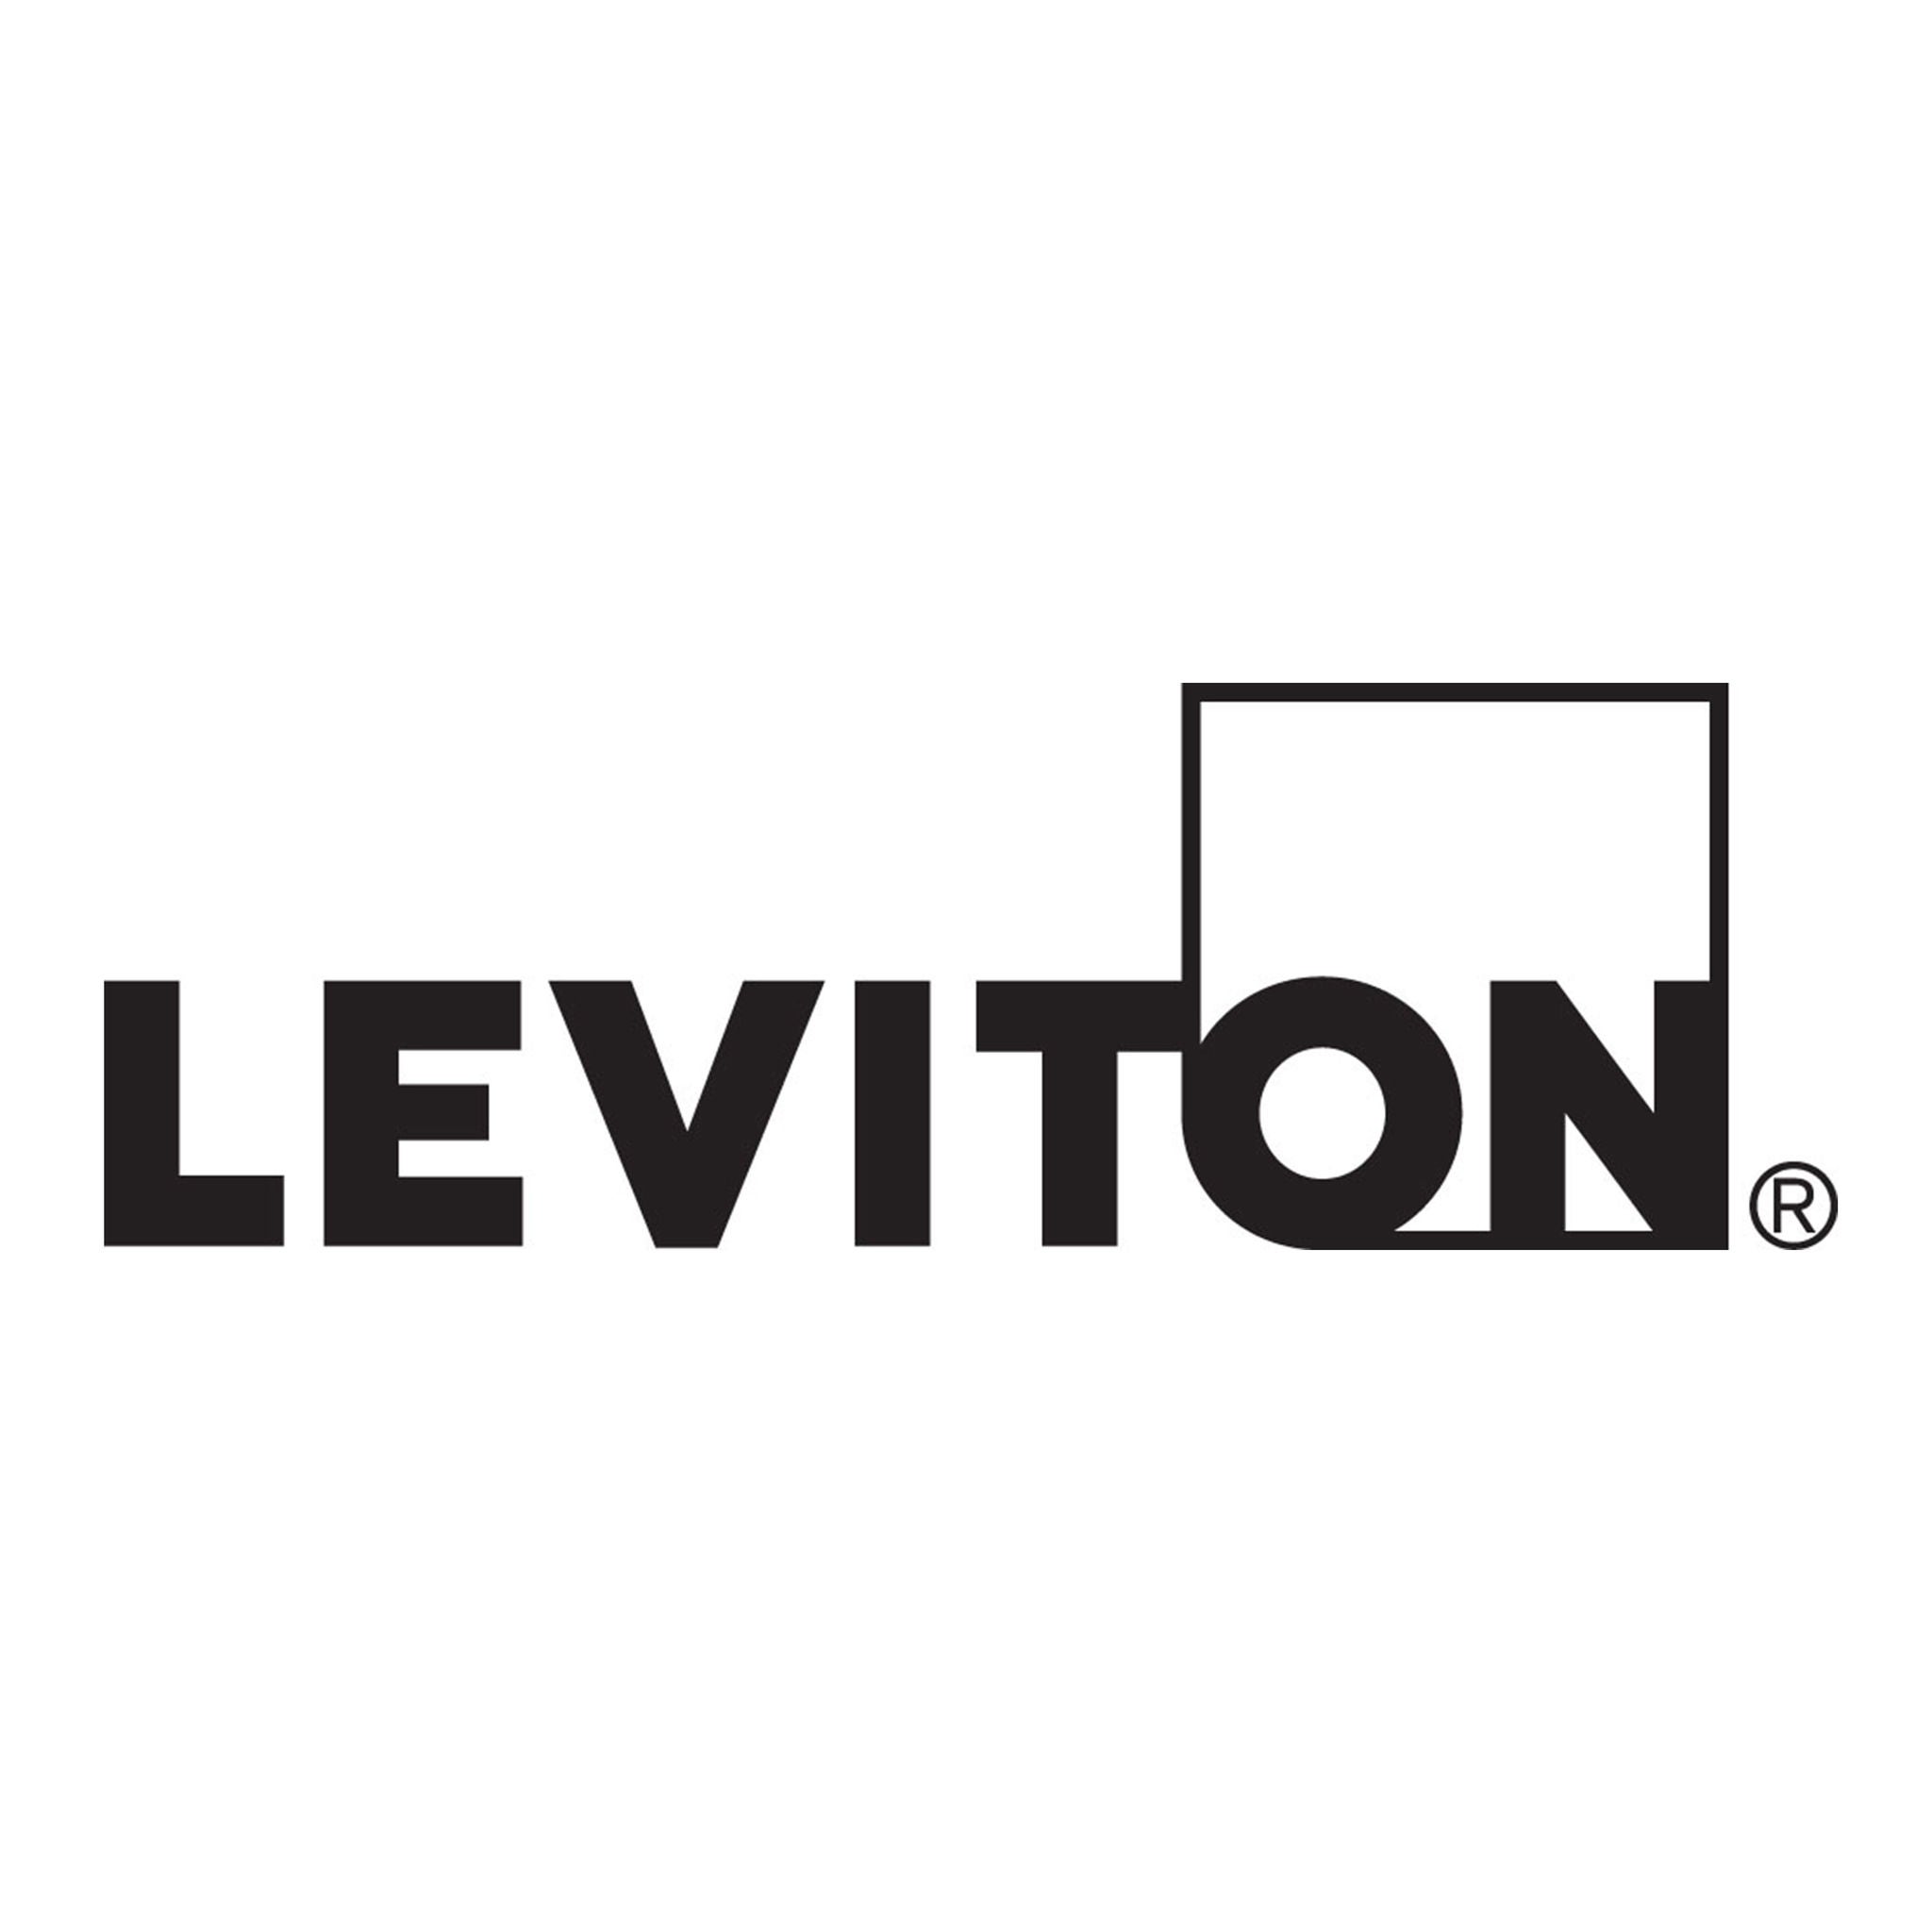 Leviton Reverse Stroke Logo